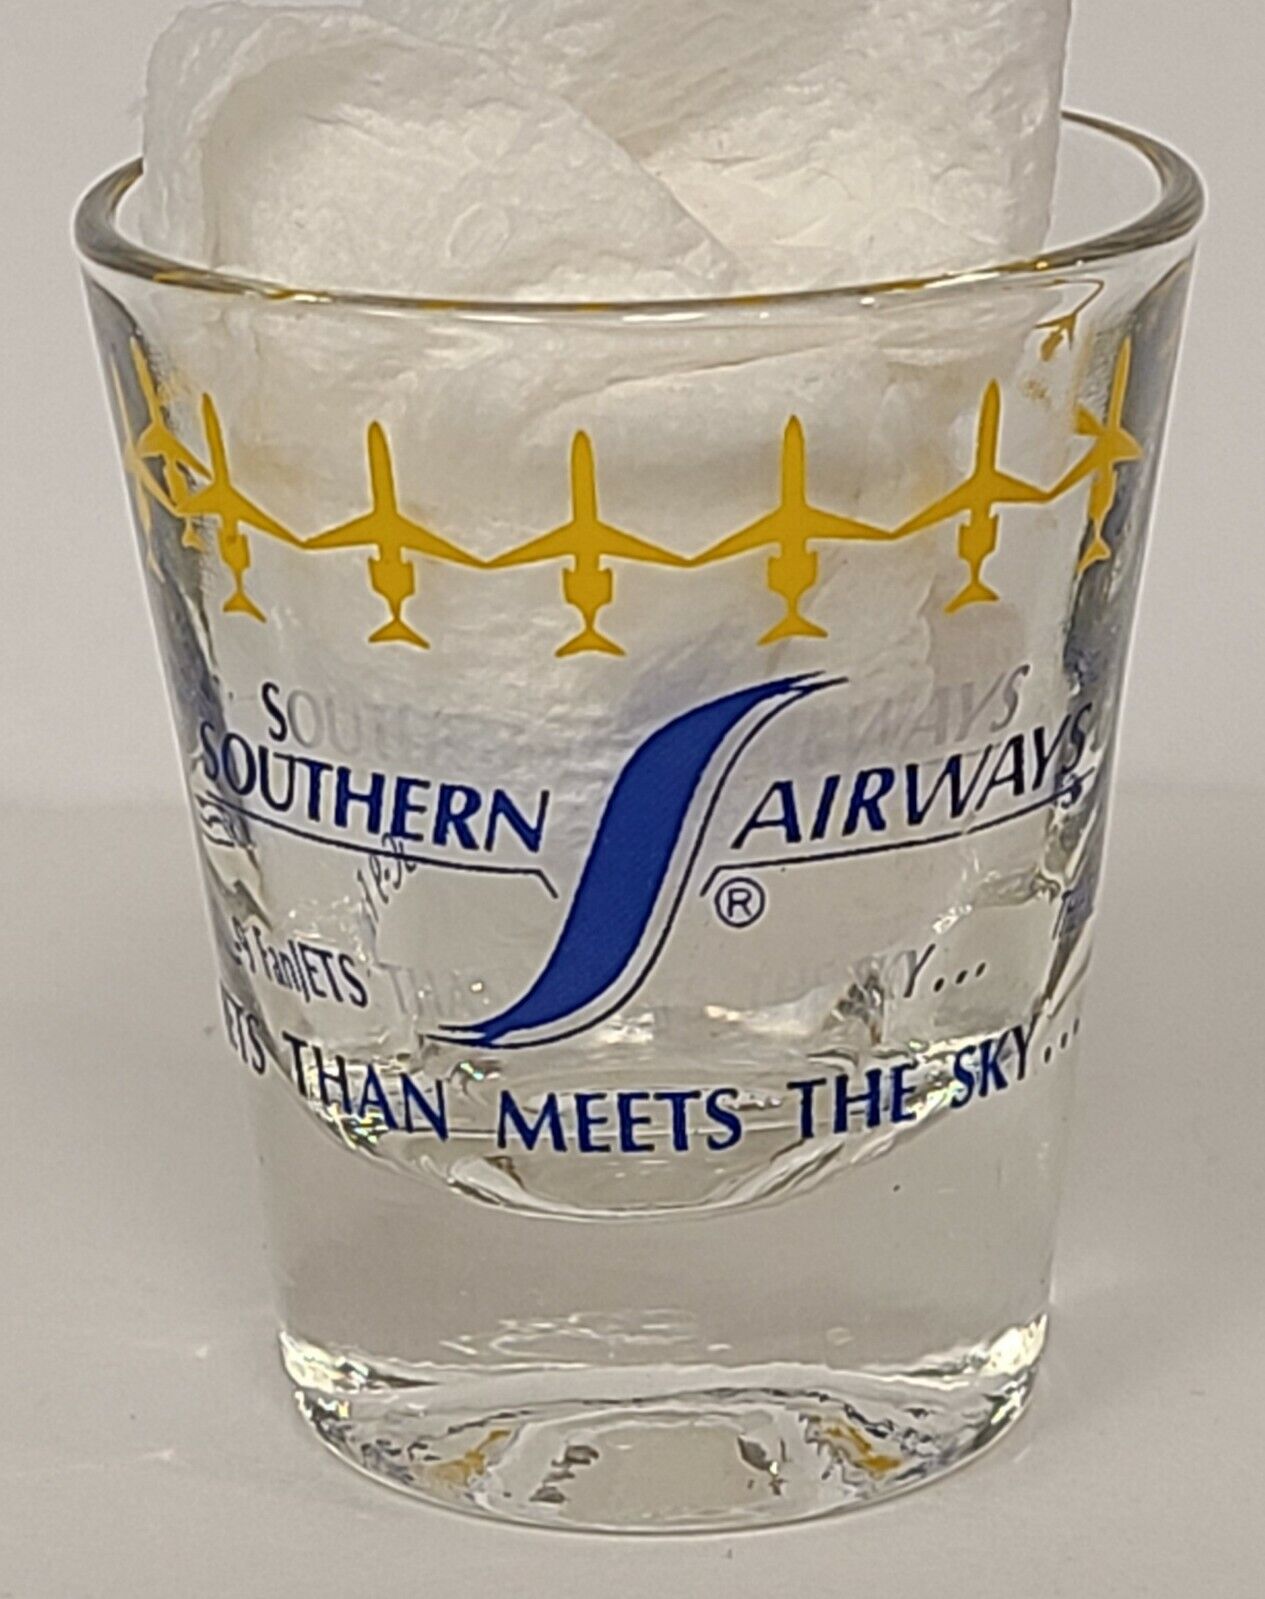 SOUTHERN AIRWAYS SHOT GLASS VINTAGE 1968 DOUGLAS DC-9 FANJET AIRLINE ADVERTISING